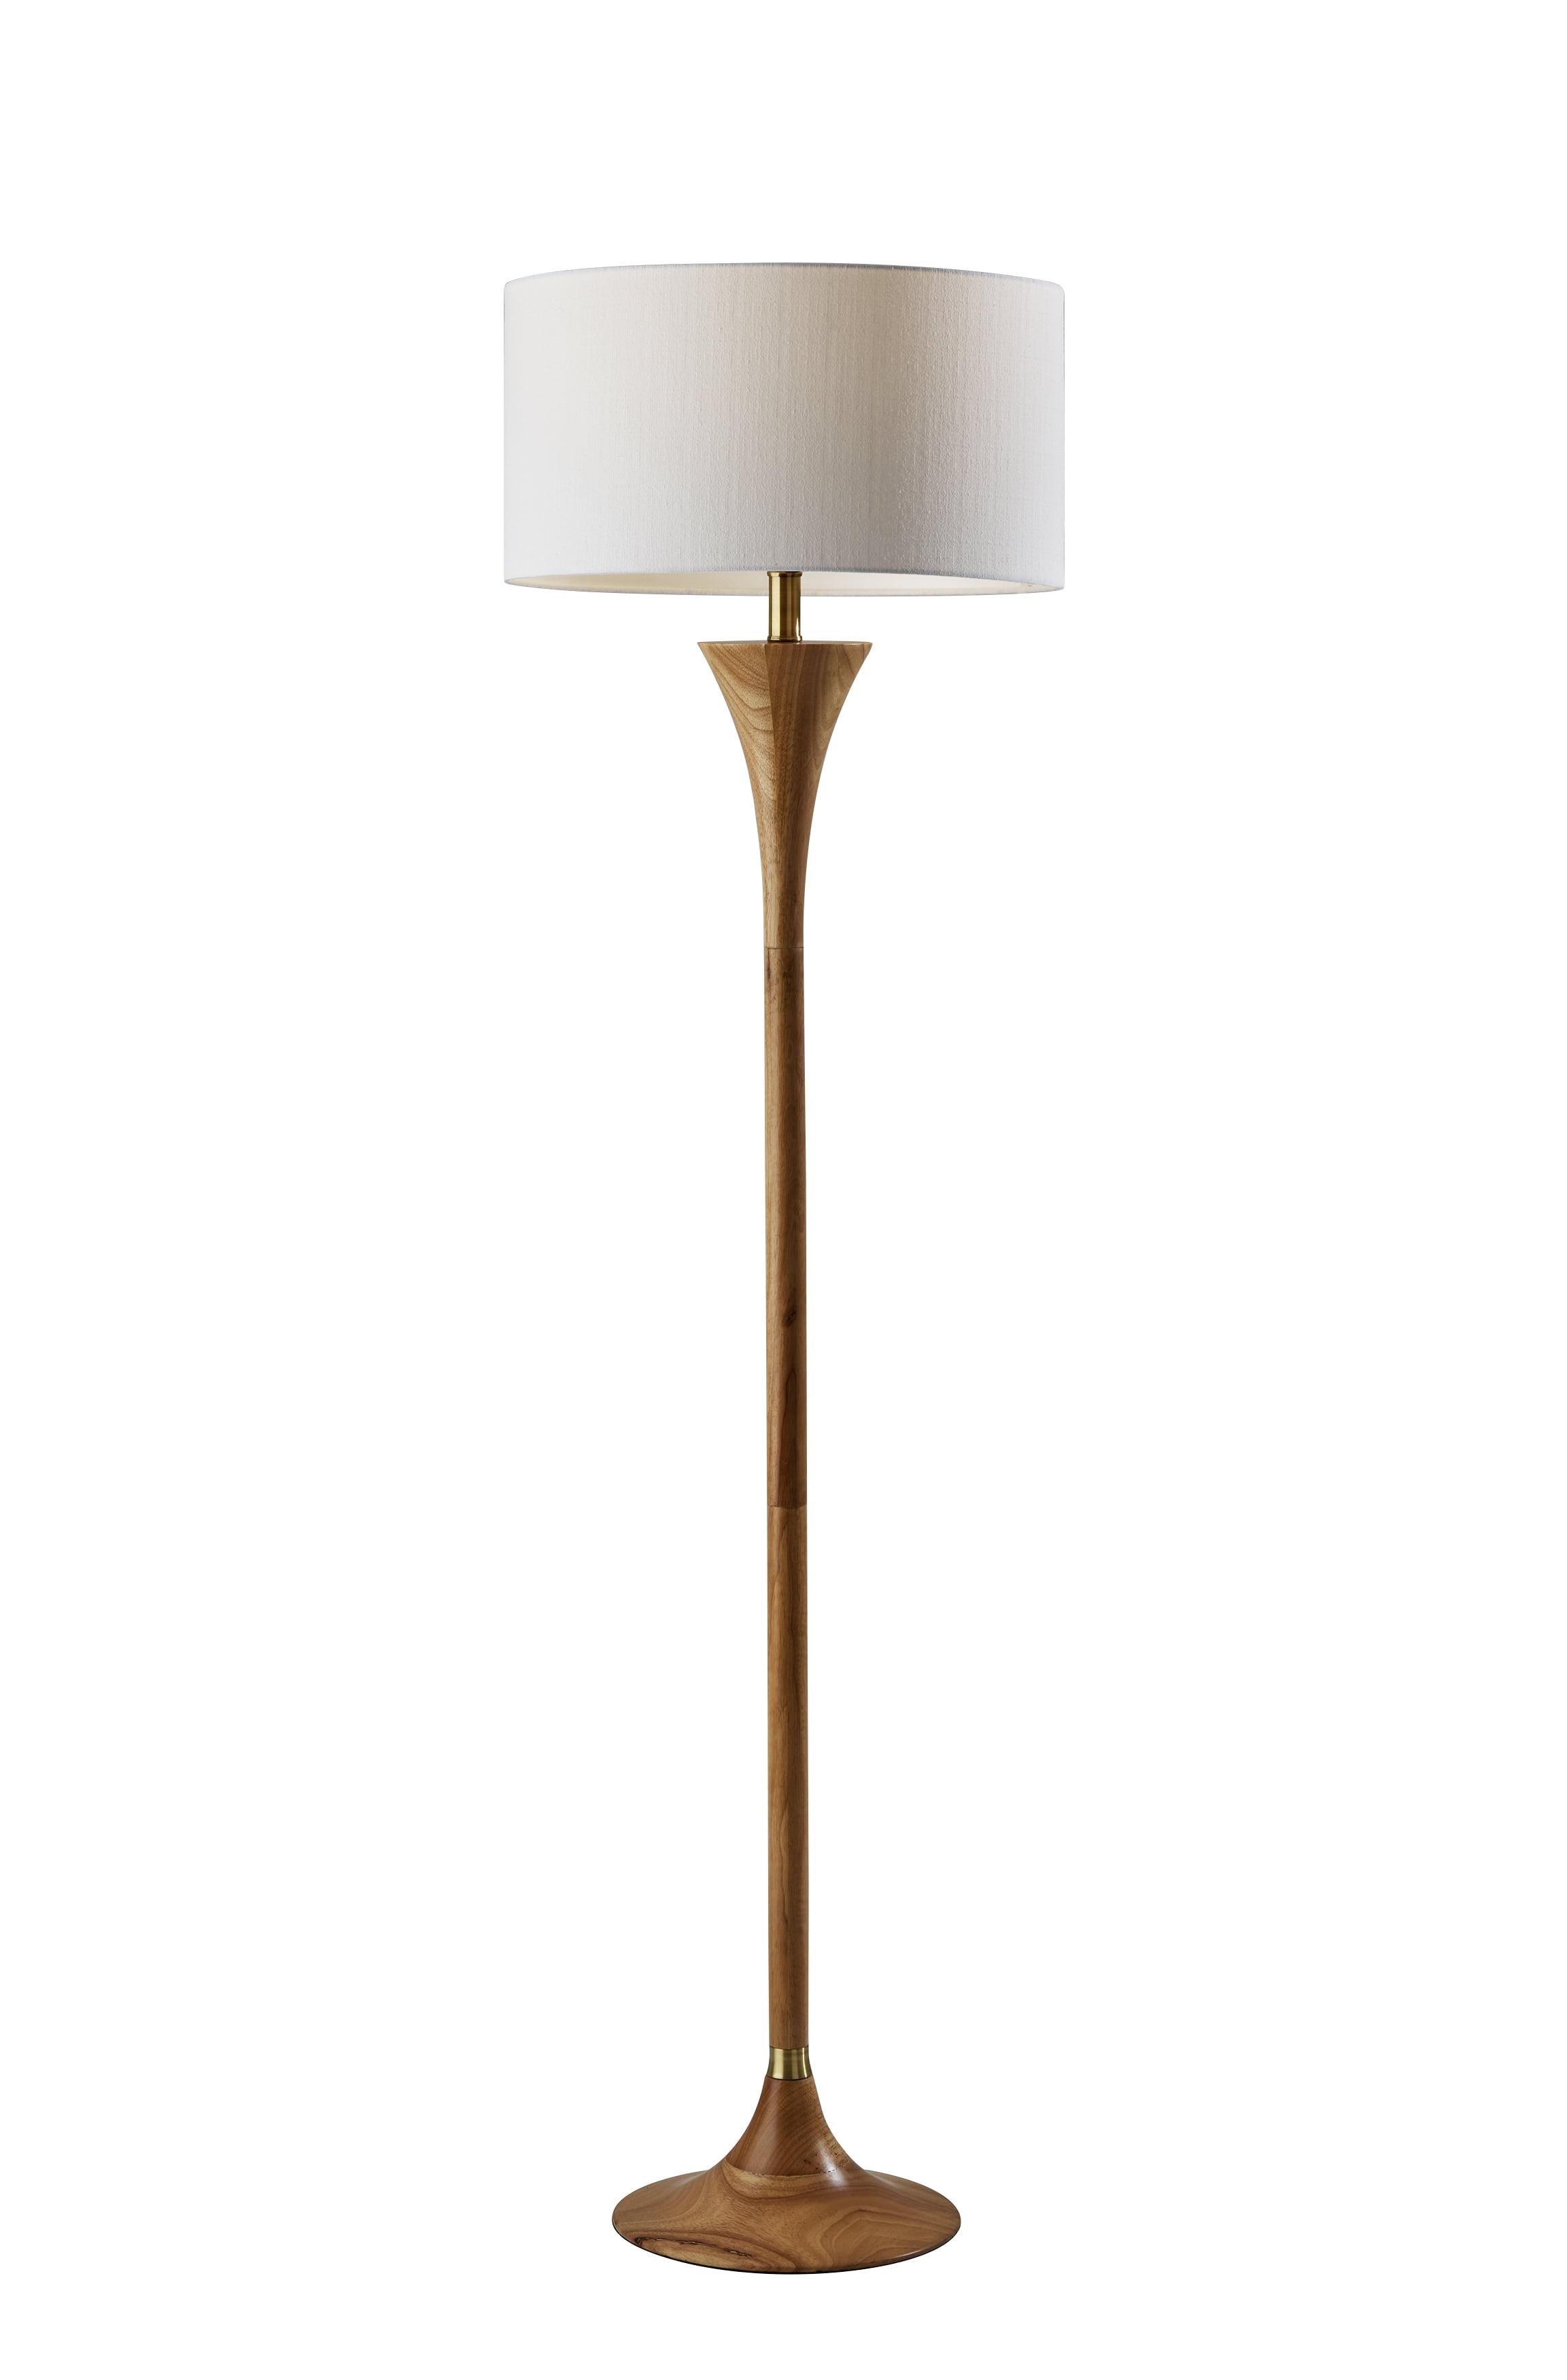 Elegant Natural Rubberwood Floor Lamp with Antique Brass Accent